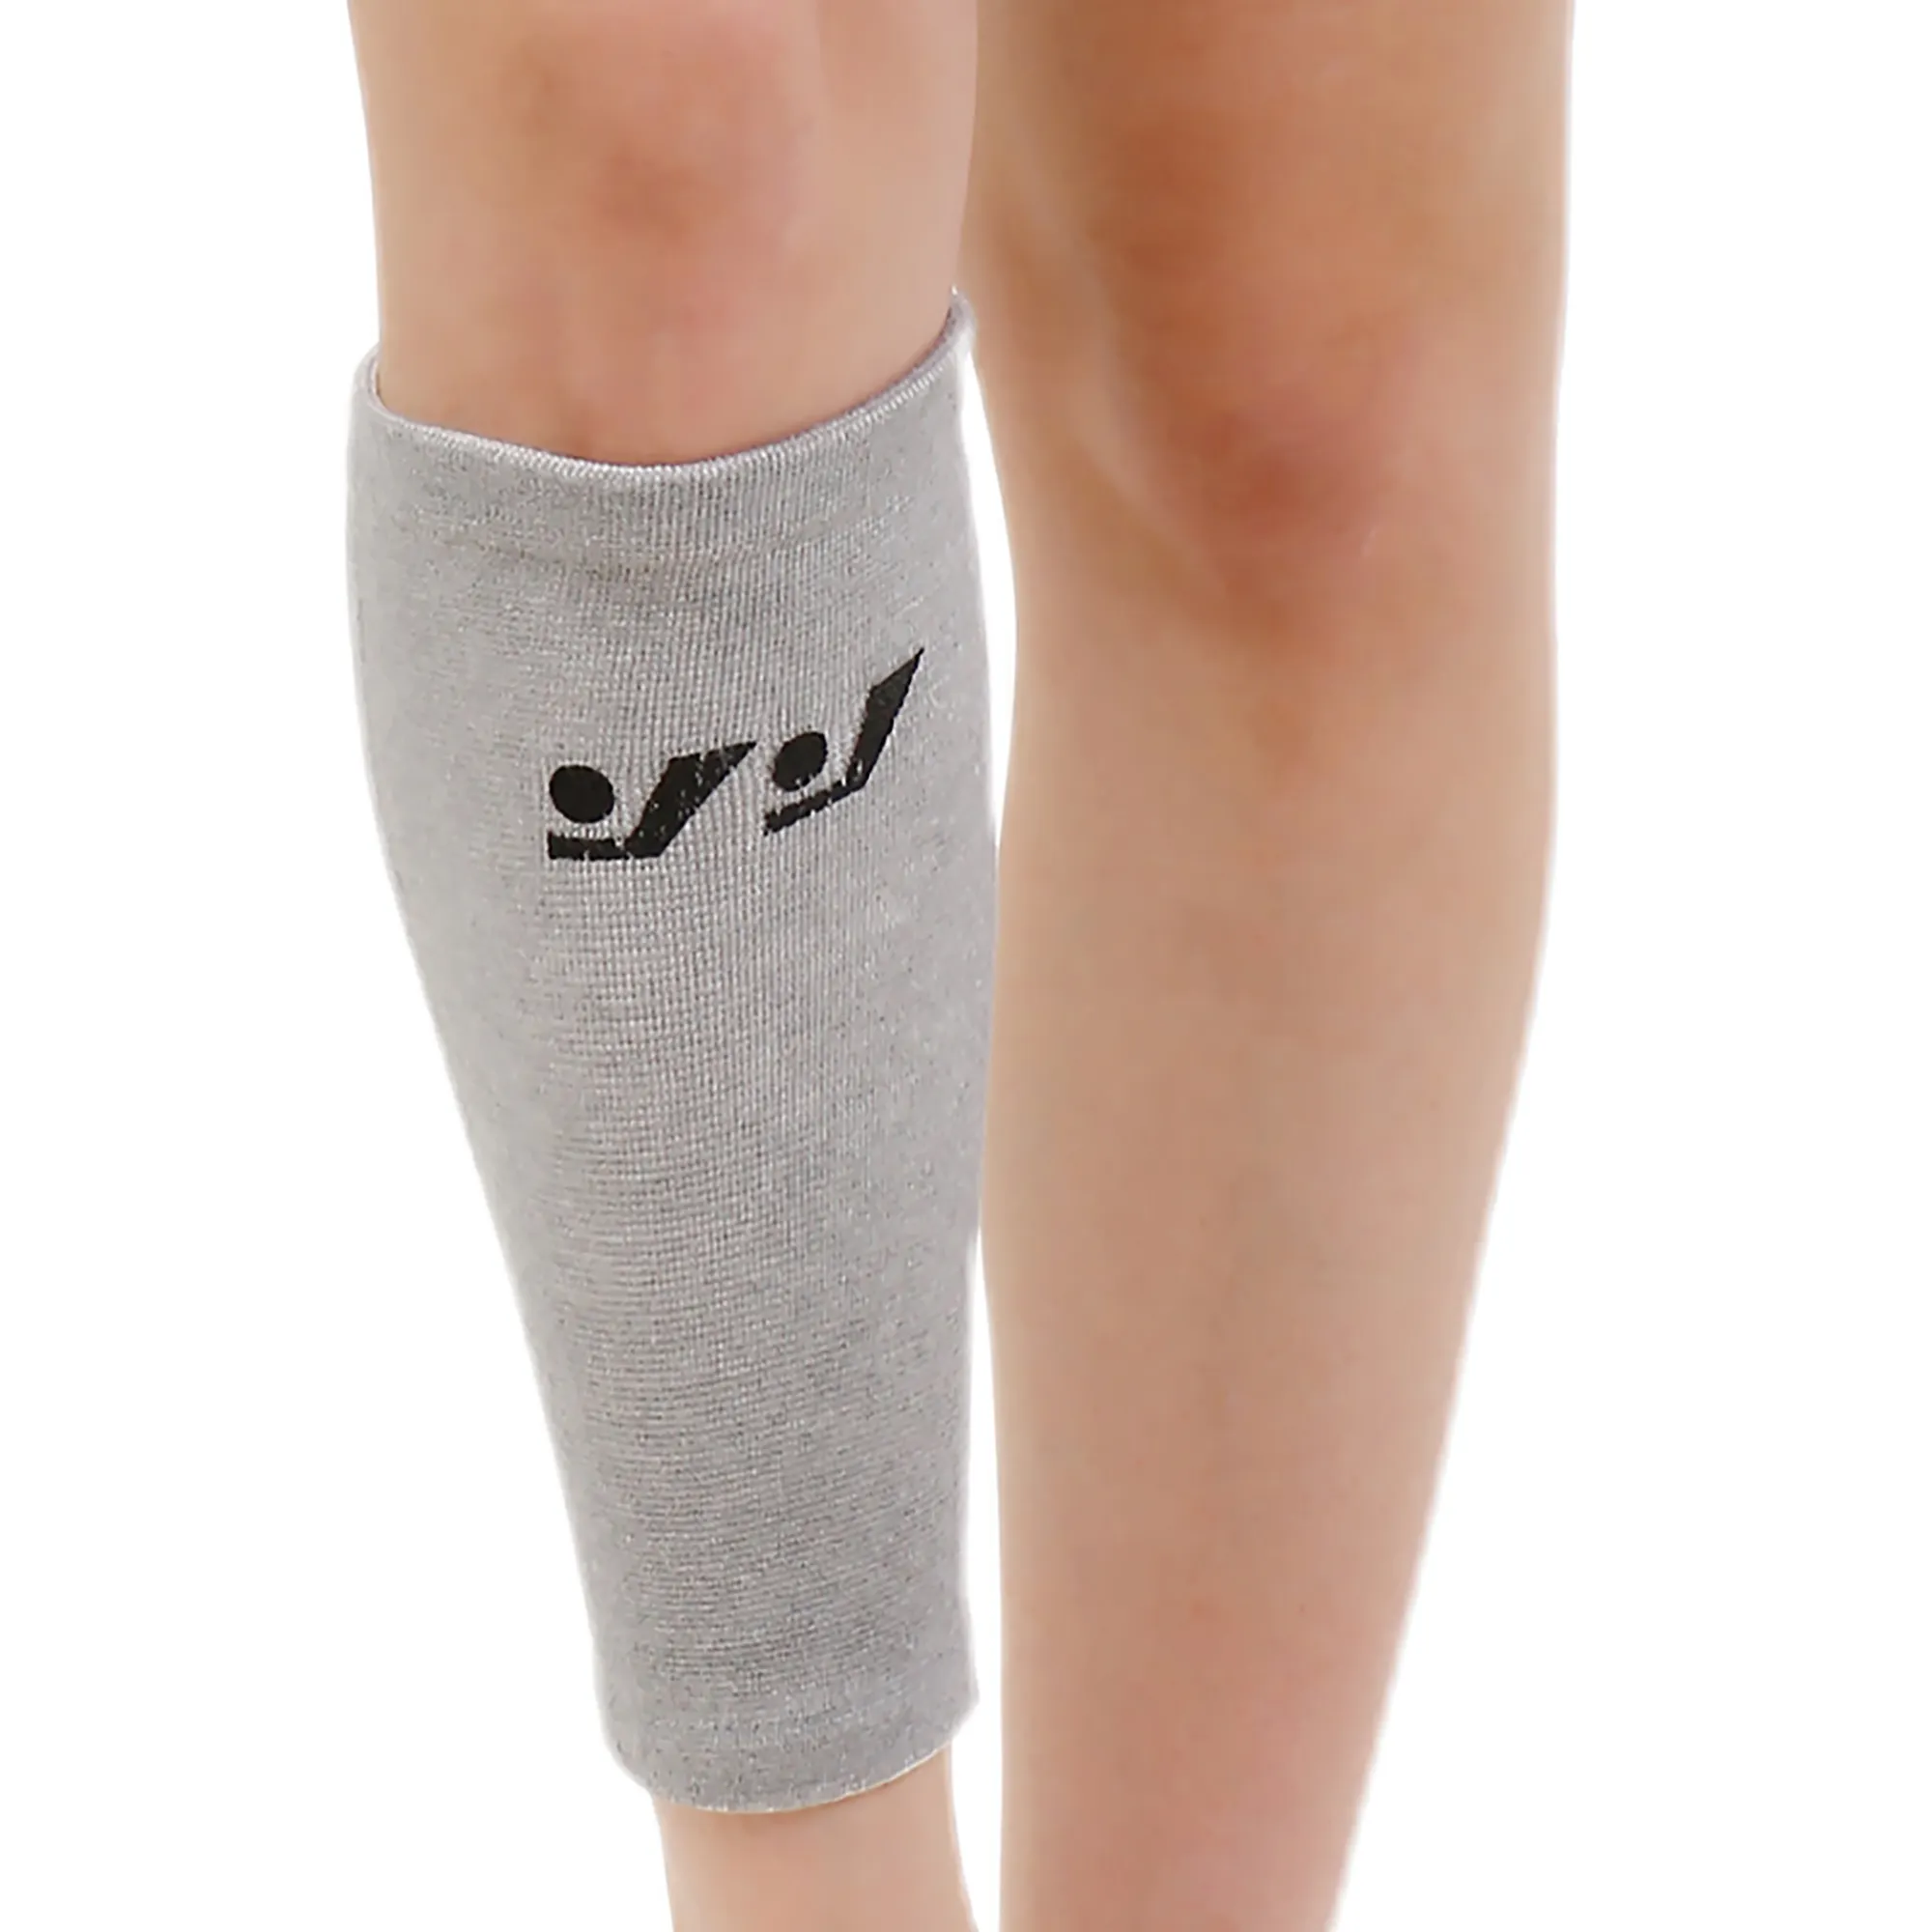 Soft skin-friendly warm leg sleeve elastic breathable calf compression sleeve for leg protection